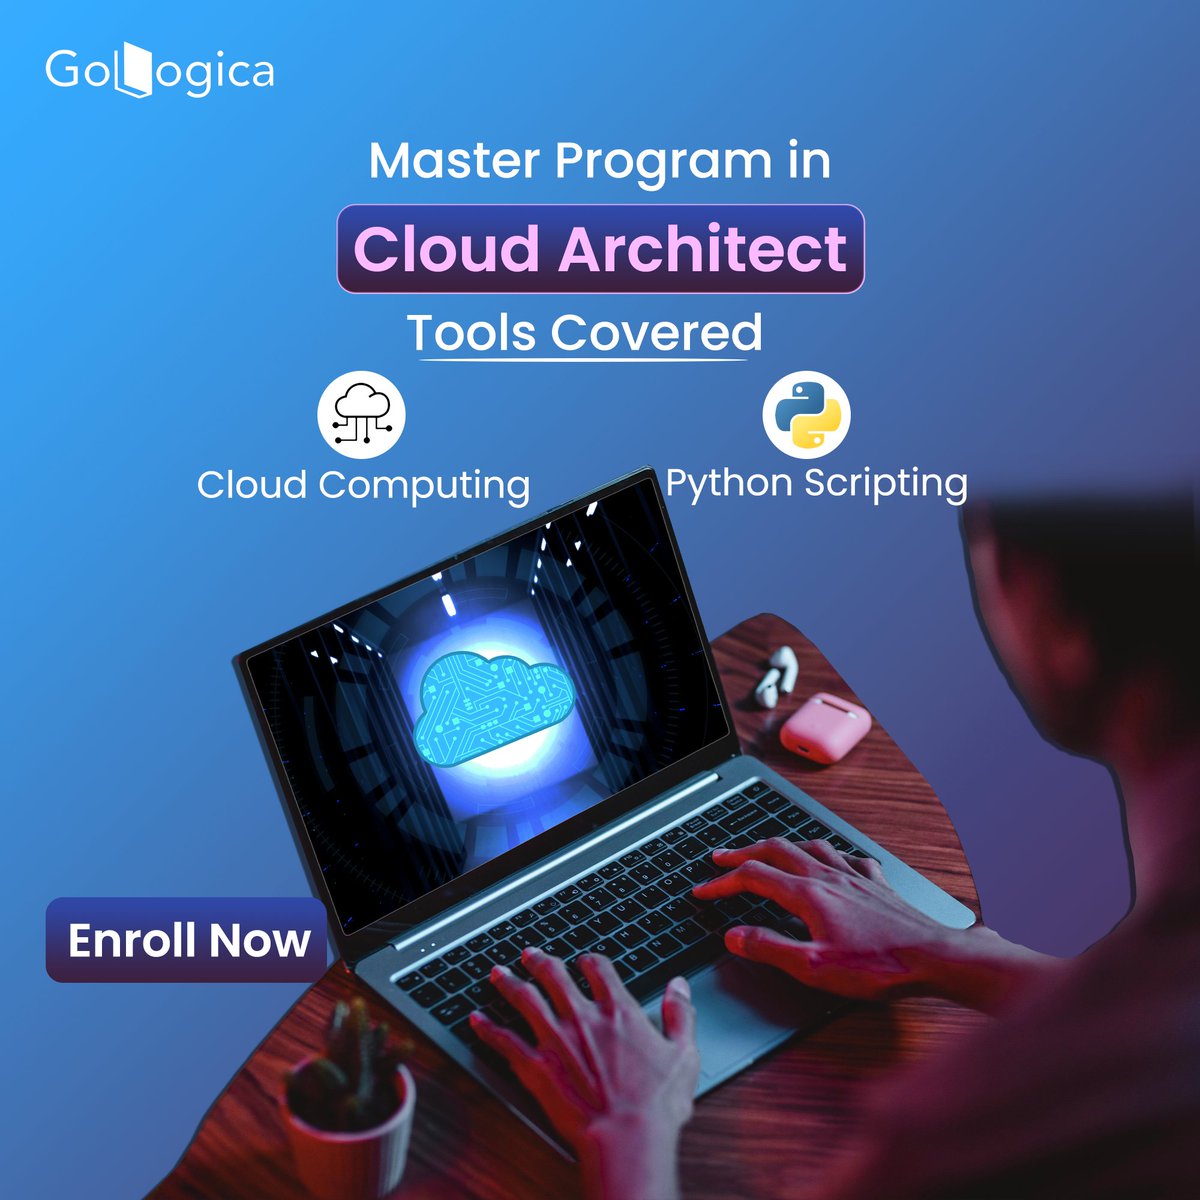 Exciting News Alert!

Elevate your career with GoLogica Master Program in Cloud Architect!

For More Details: gologica.com

#cloudcomputing #cloudarchitect #GoLogica #python #pythonprogramming #devops #itinfrastructure #aws #azure #gcp #awslambda #azurefunctions